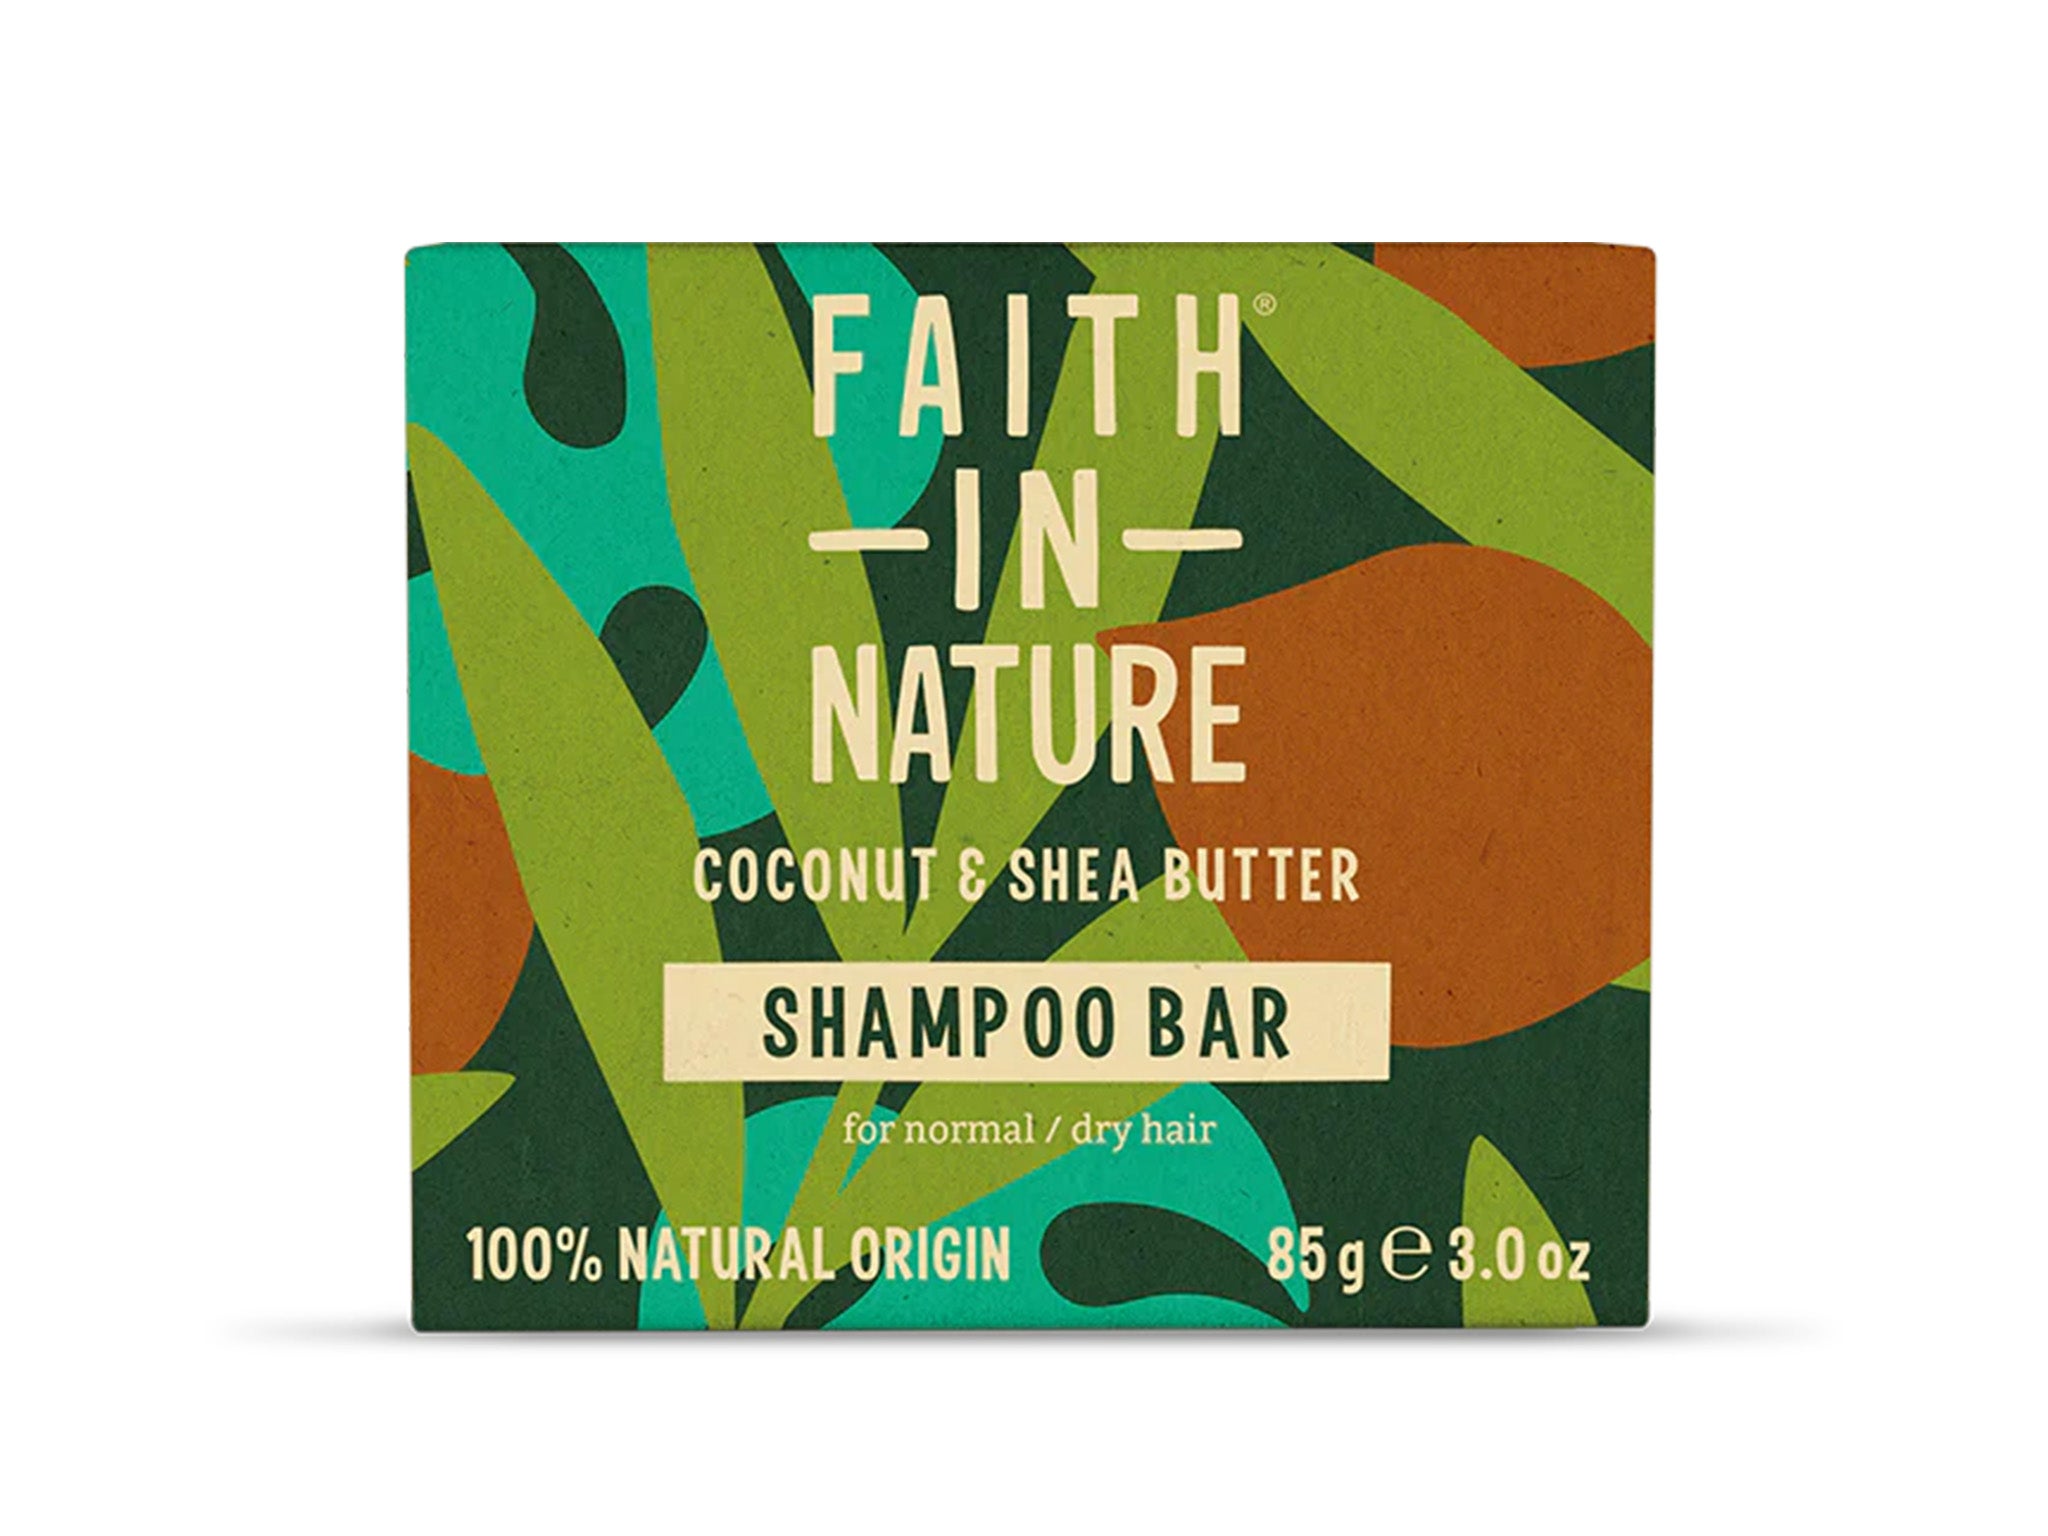 Faith in Nature coconut and shea butter shampoo bar 